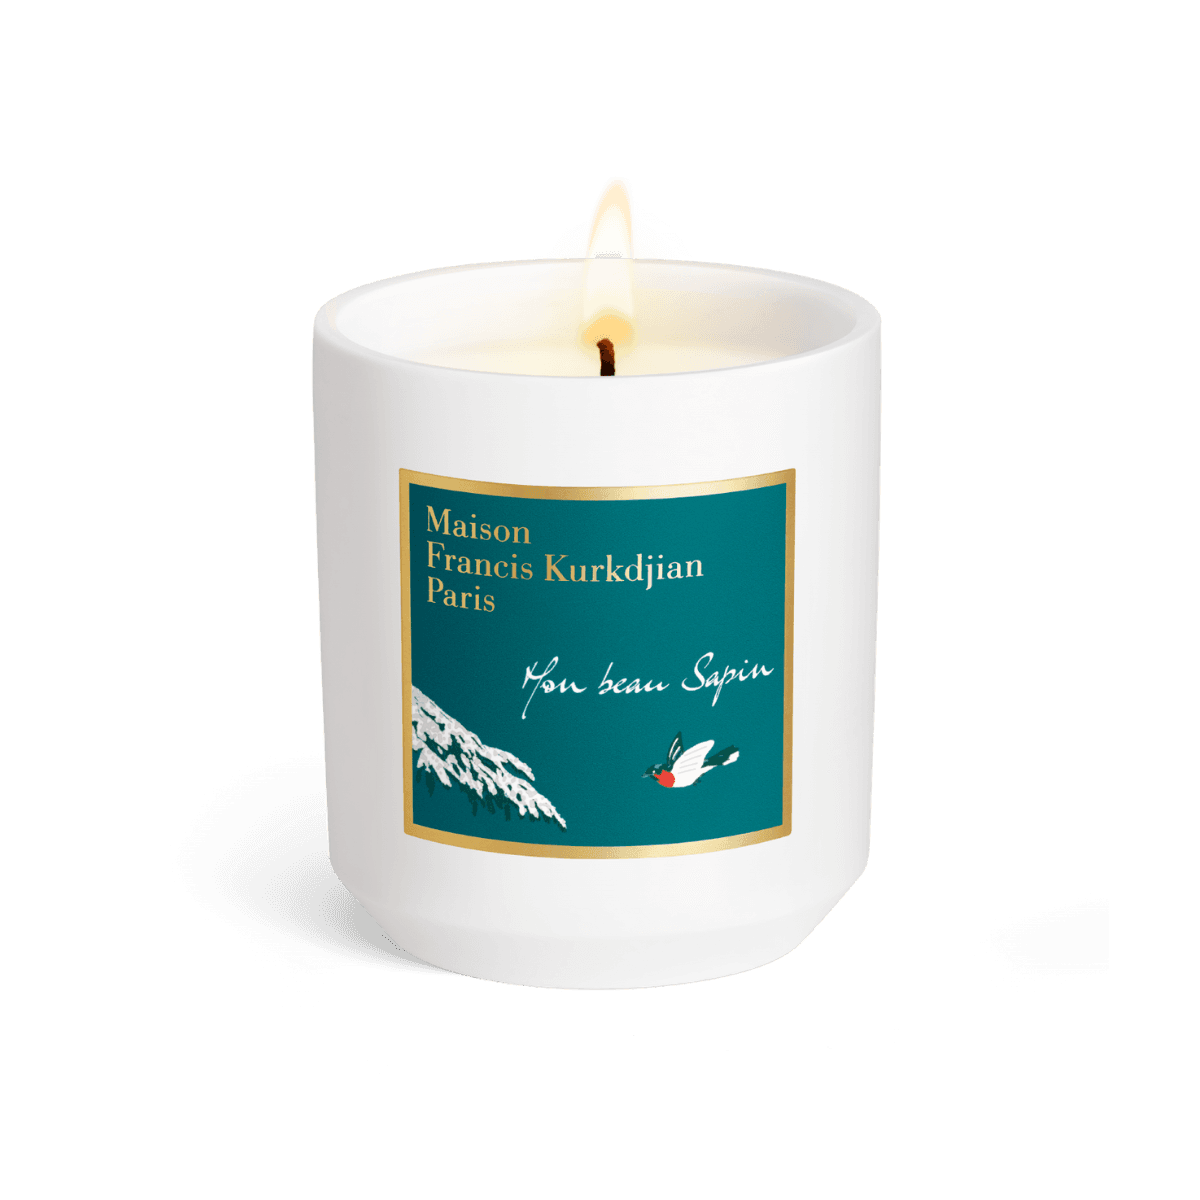 Image of Mon beau sapin scented candle by the perfume brand Maison Francis Kurkdjian